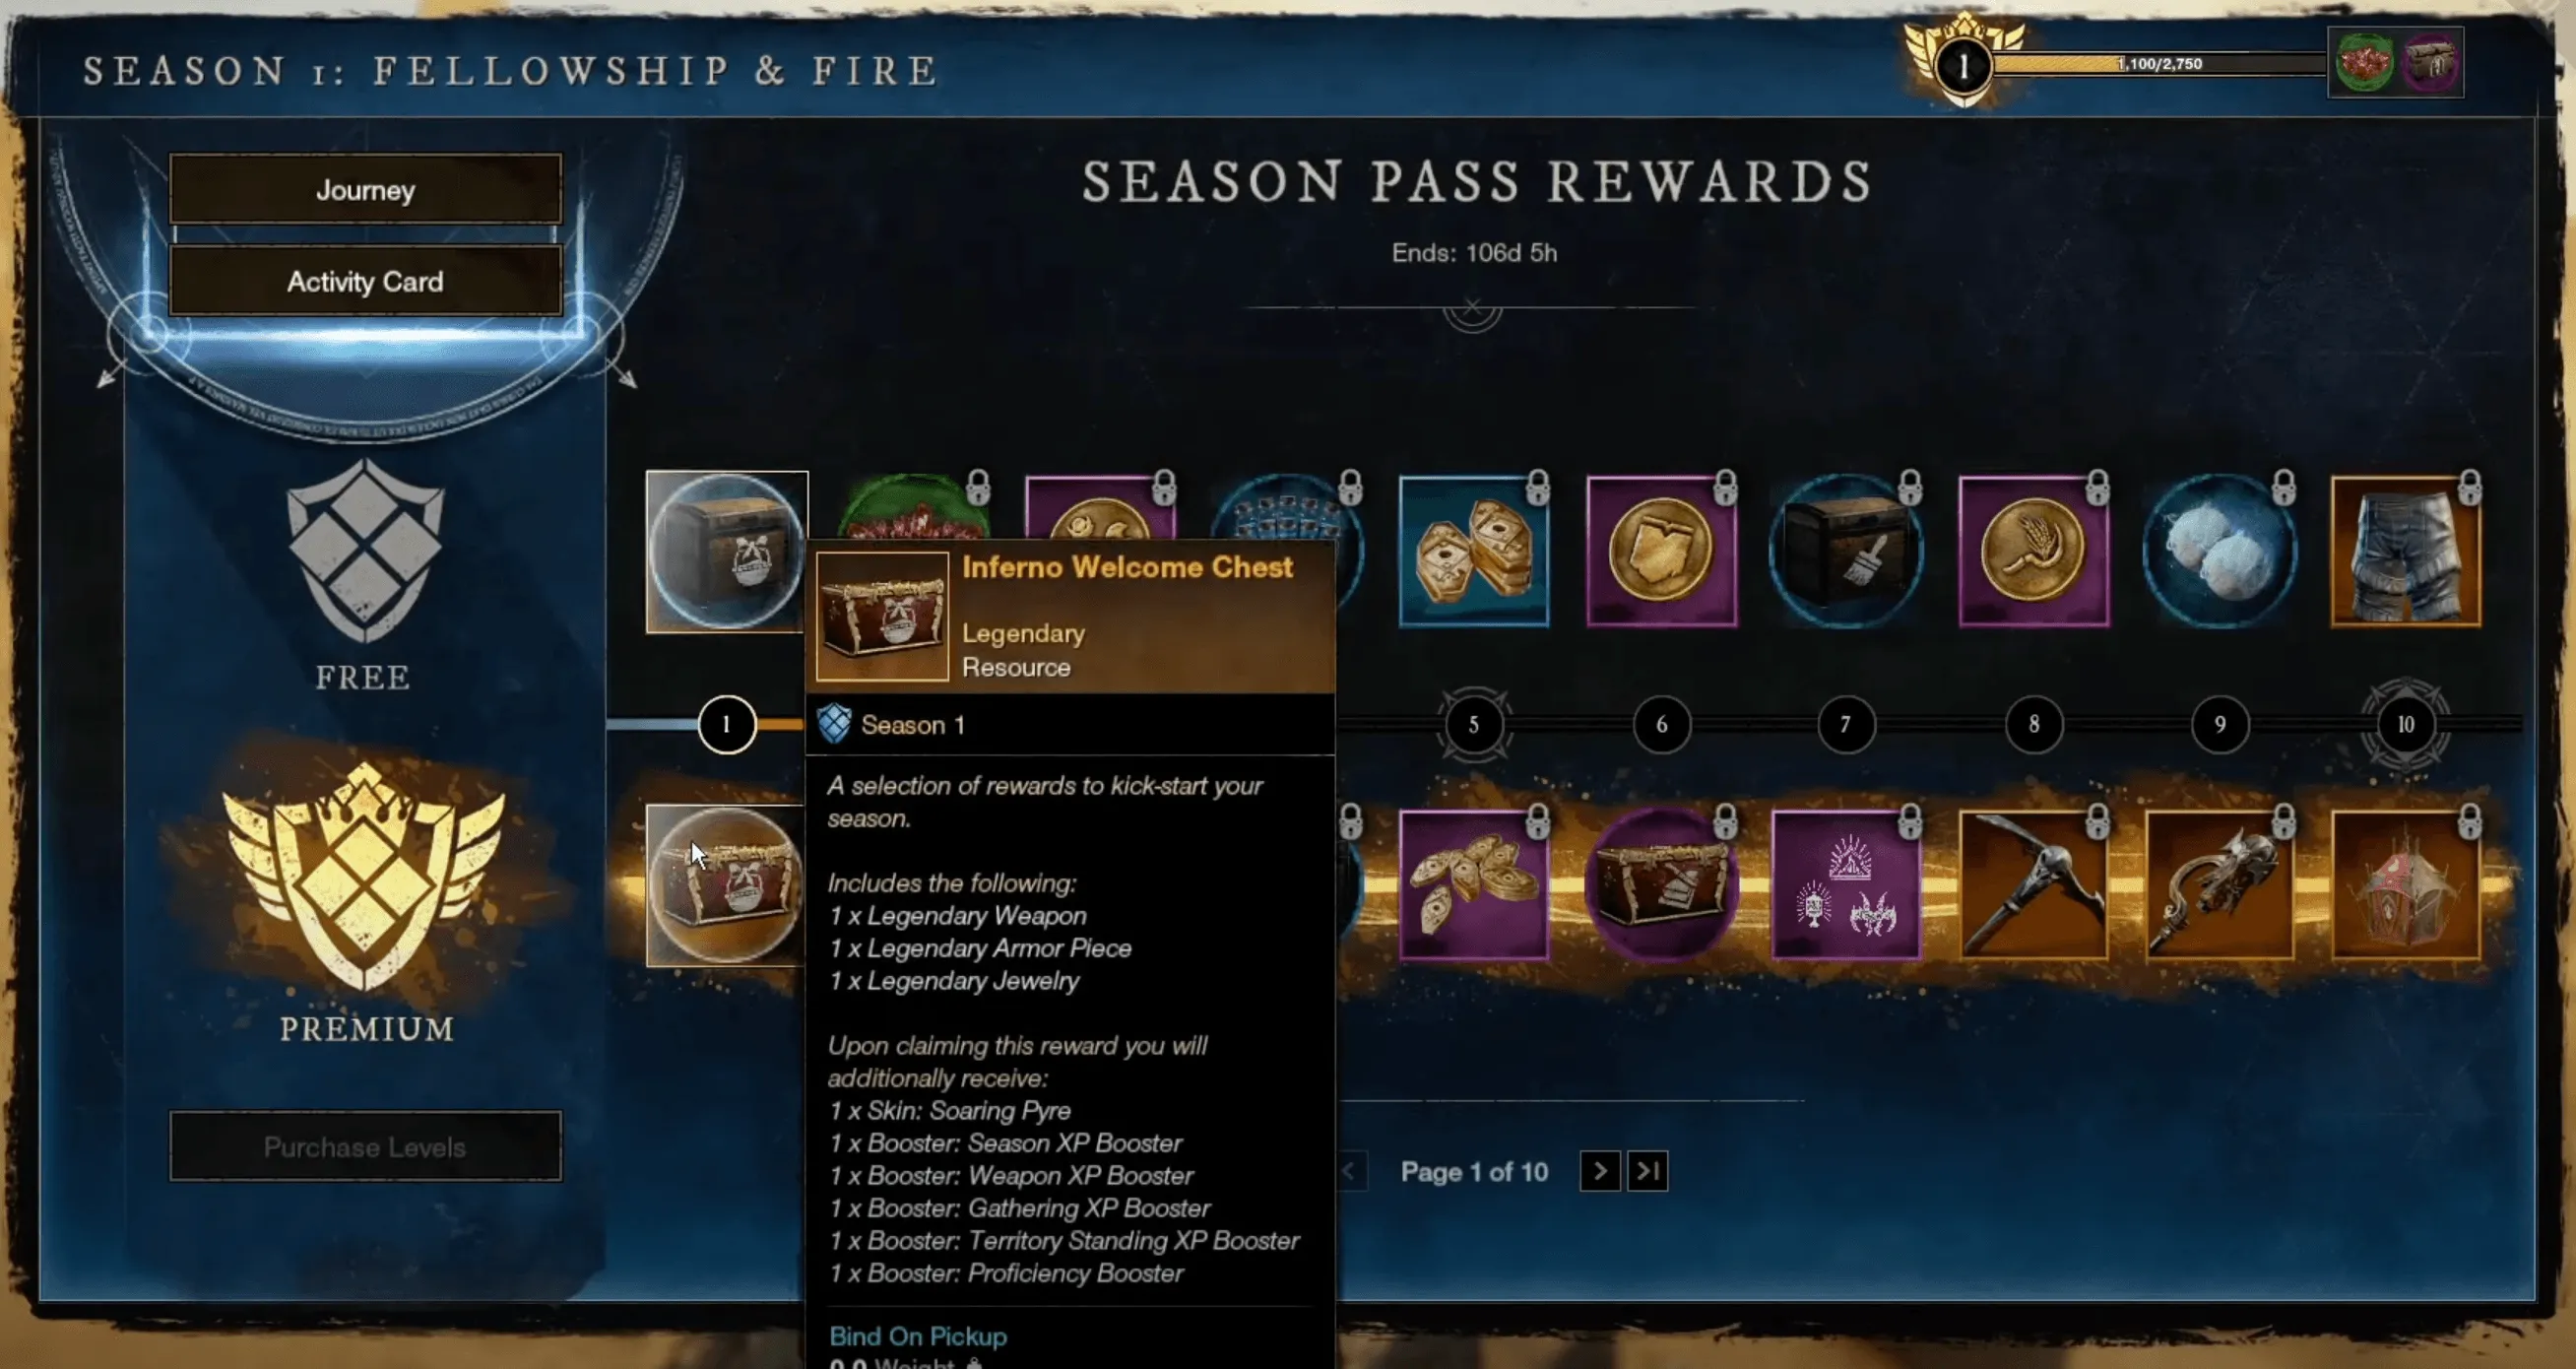 Screenshots of first rewards in Season Pass (screenshot from PTR, subject to change)